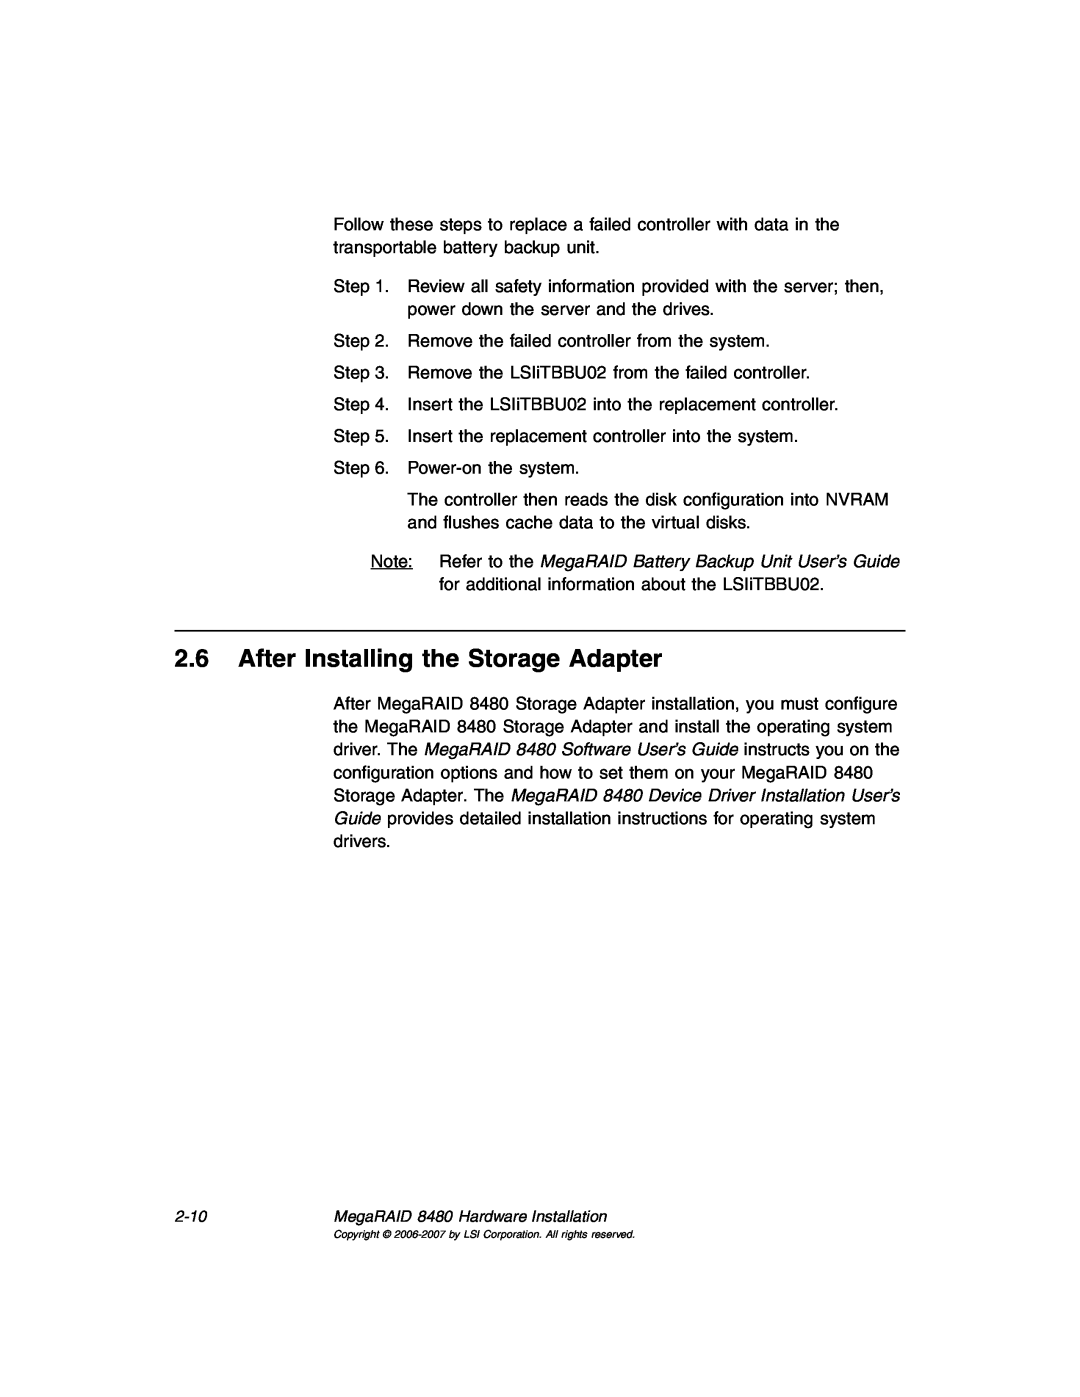 IBM MegaRAID 8480 manual After Installing the Storage Adapter 